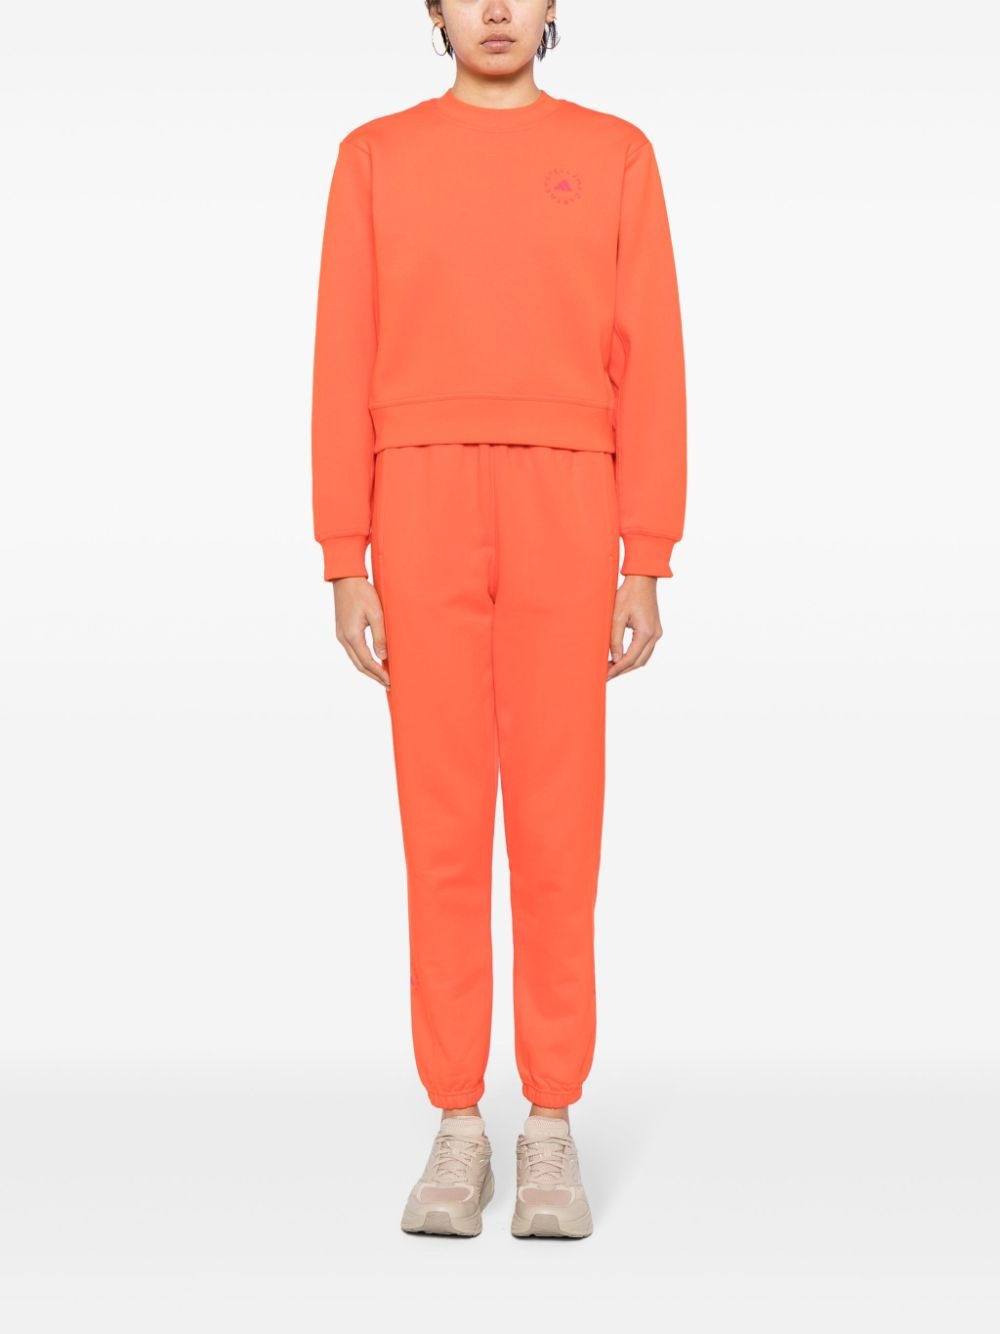 Adidas x Stella McCartney Long Sleeve Sweatshirt in Orange